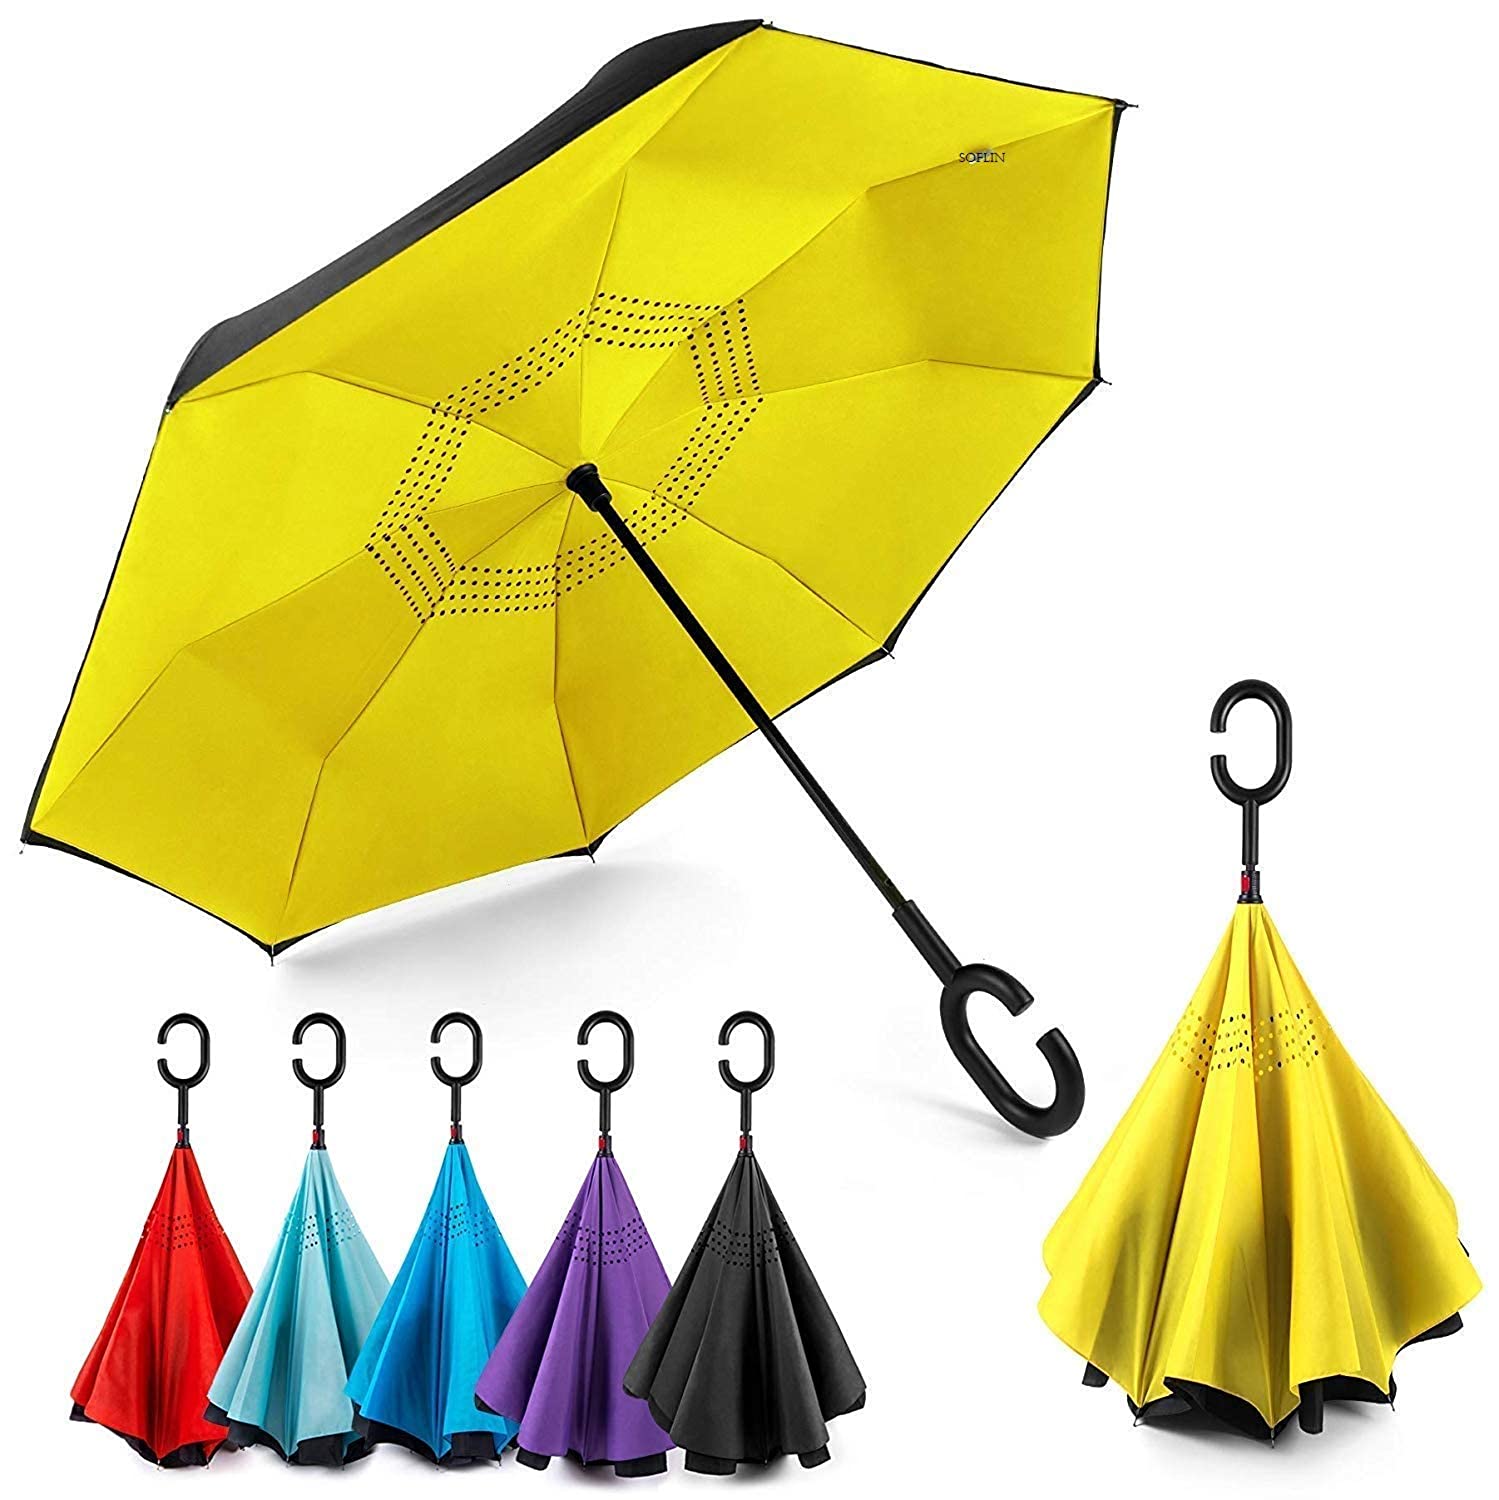 SOFLIN Double Layer Reversible Umbrella